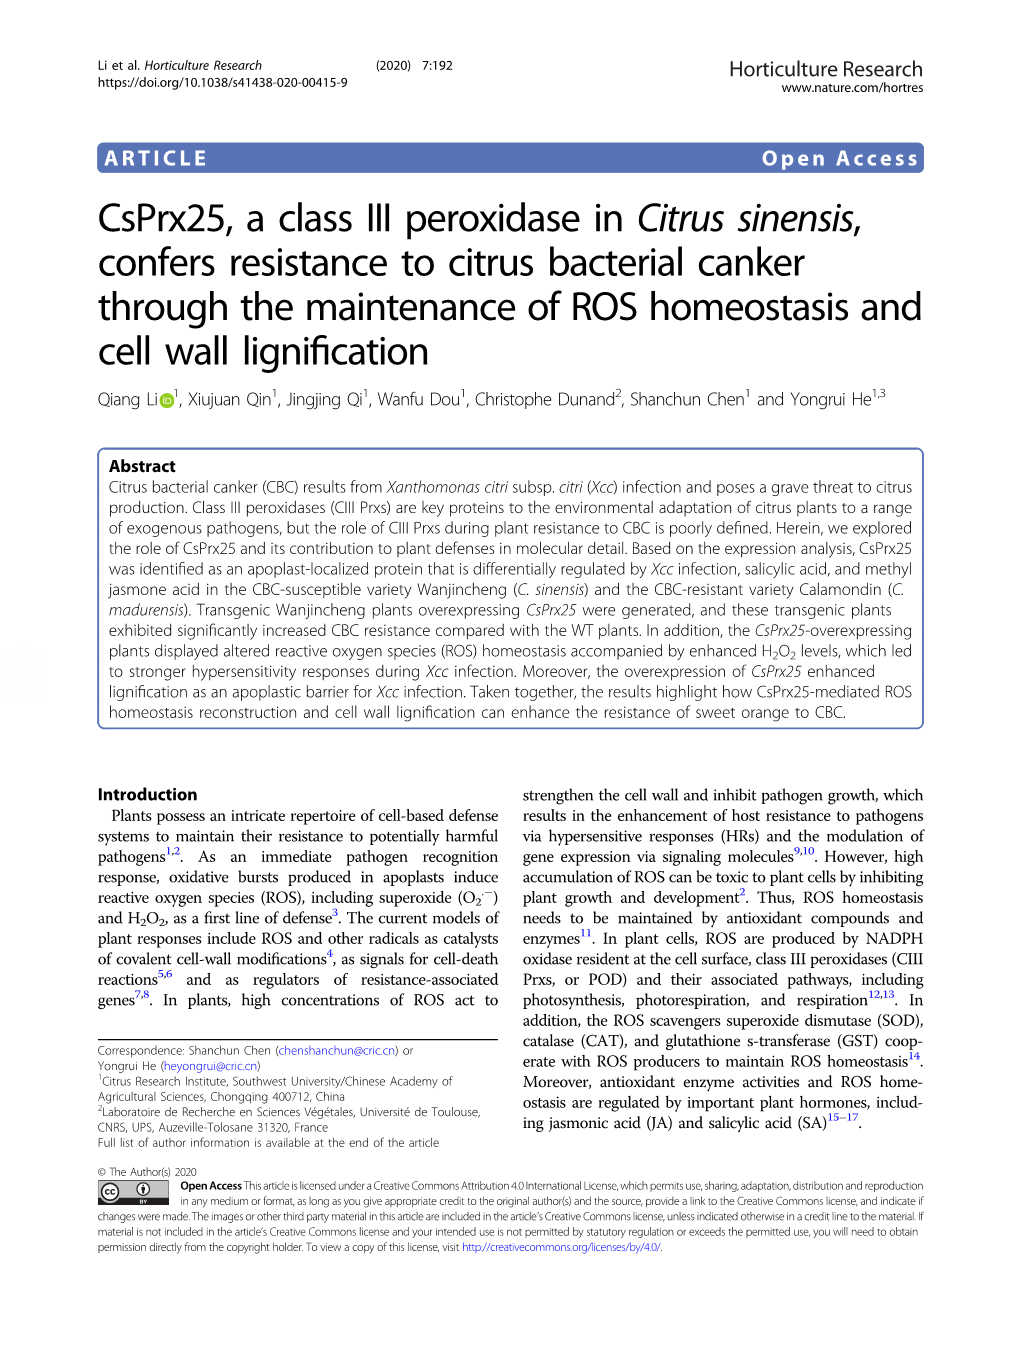 Csprx25, a Class III Peroxidase in Citrus Sinensis, Confers Resistance